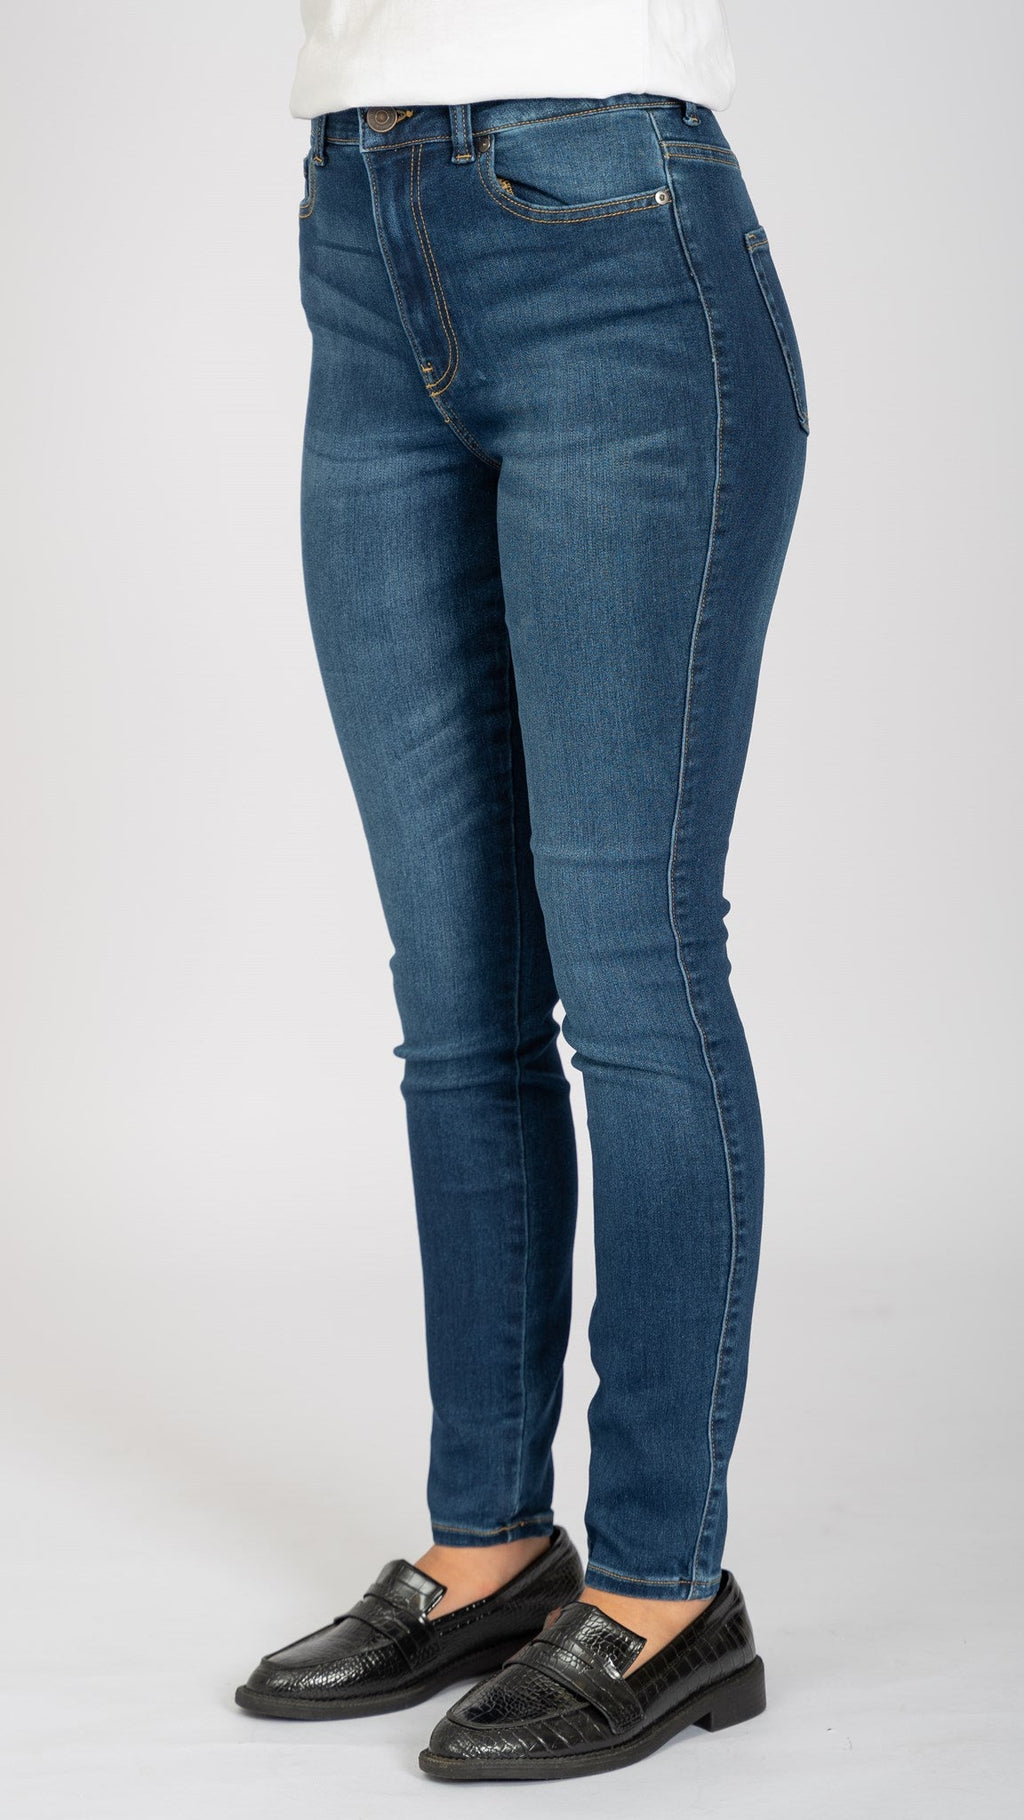 The Original Performance Skinny jeans - medium blauwe denim